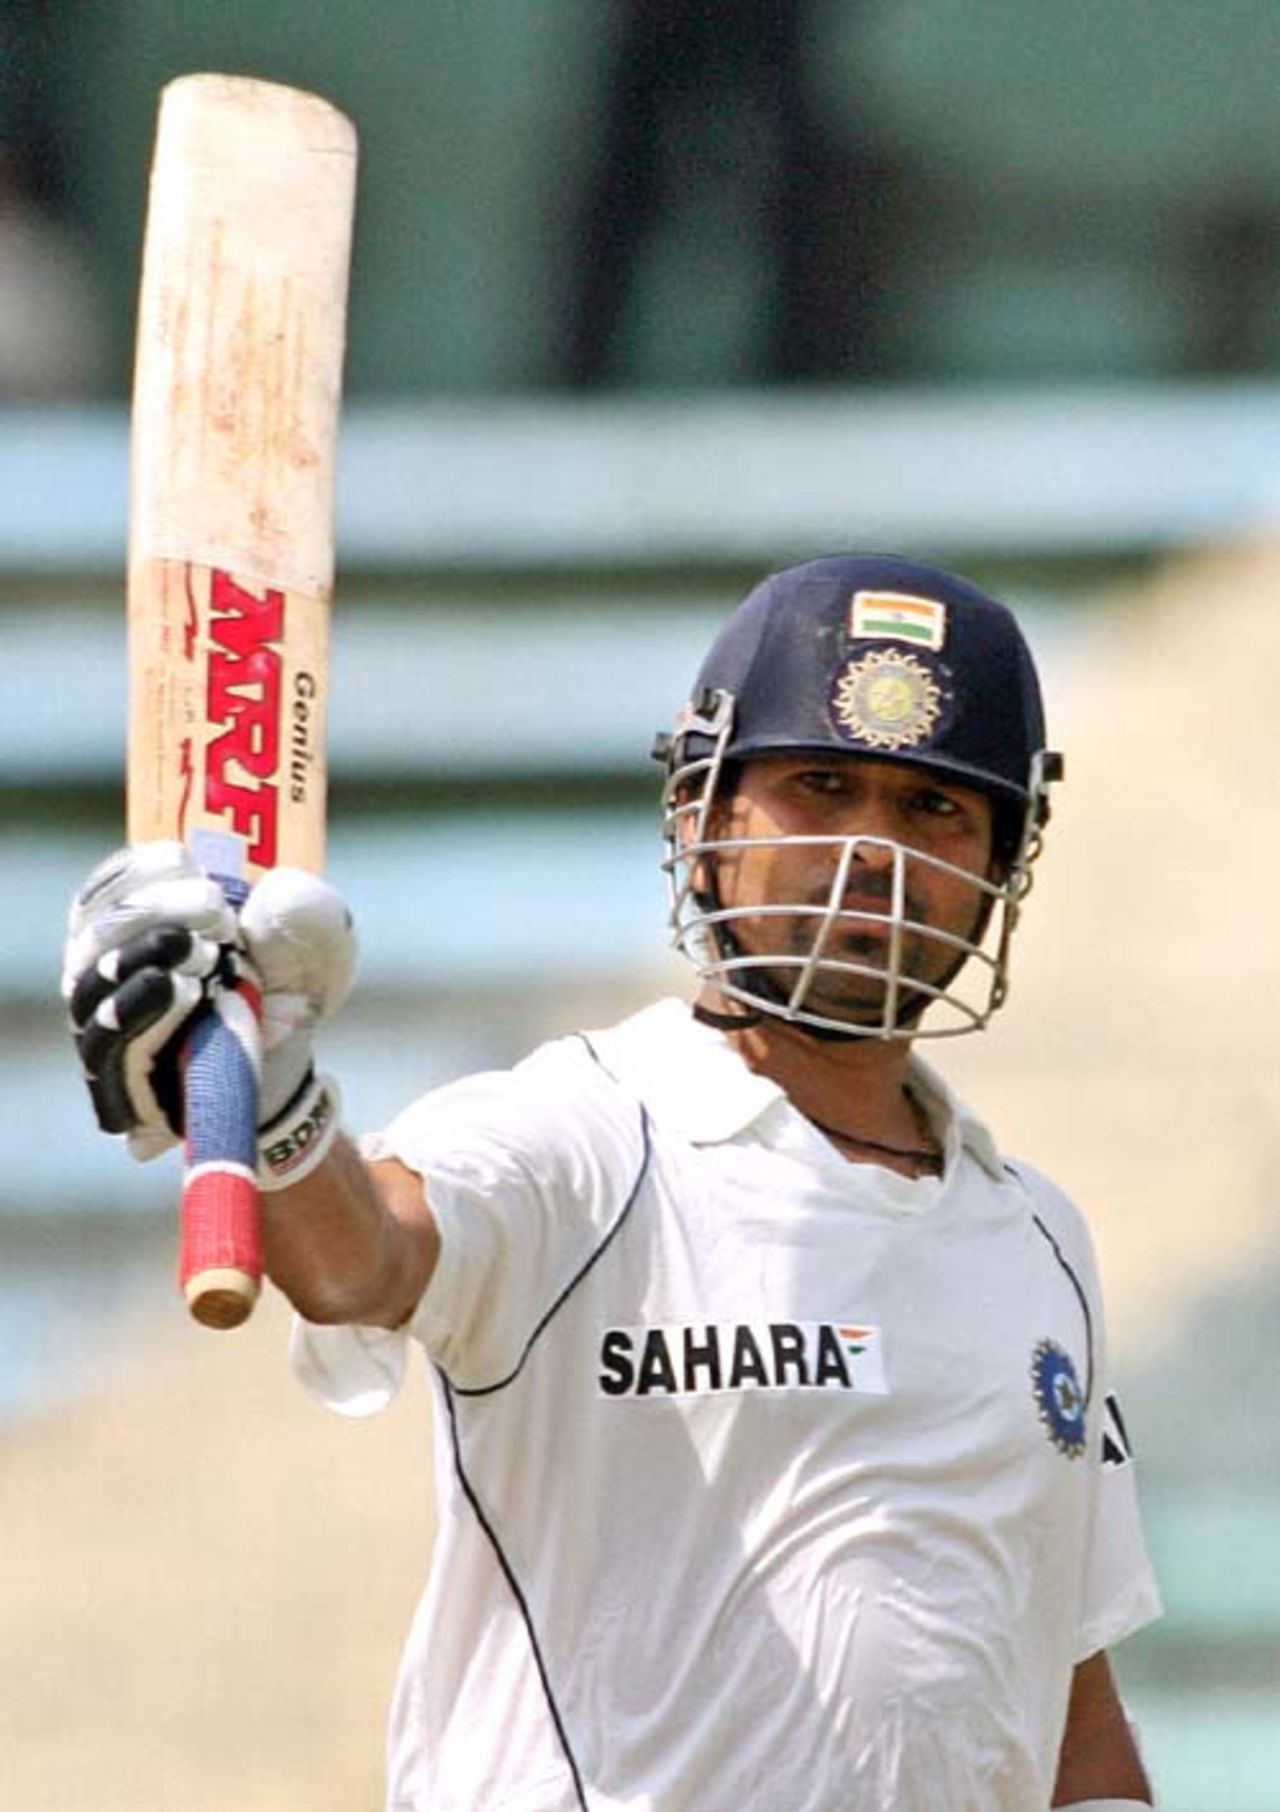 Sachin Tendulkar completes his 37th hundred, Bangladesh v India, 2nd Test, Mirpur, 2nd day, May 26, 2007
